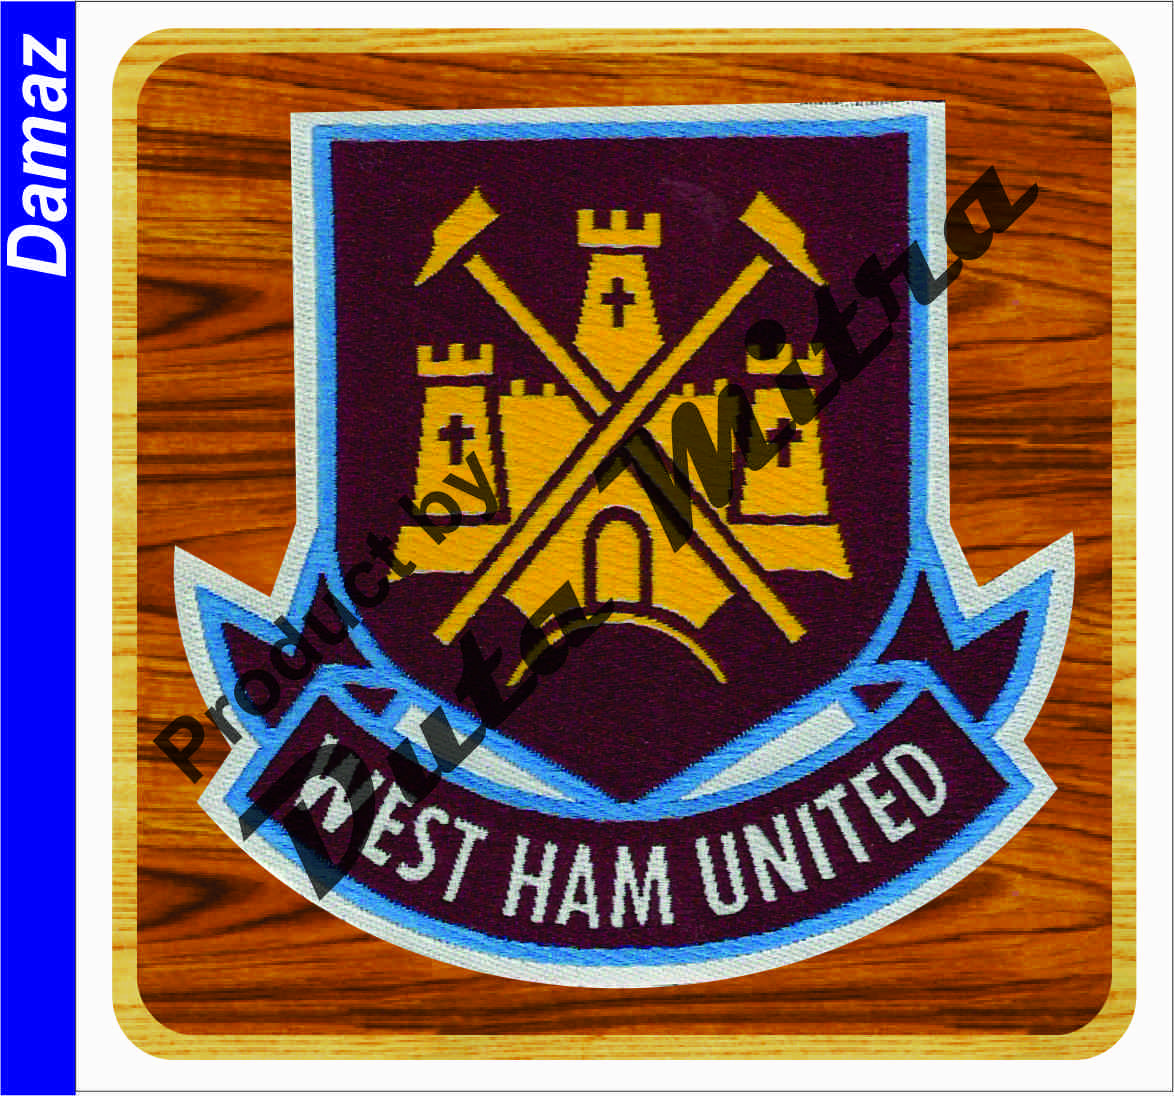  - Logo west ham